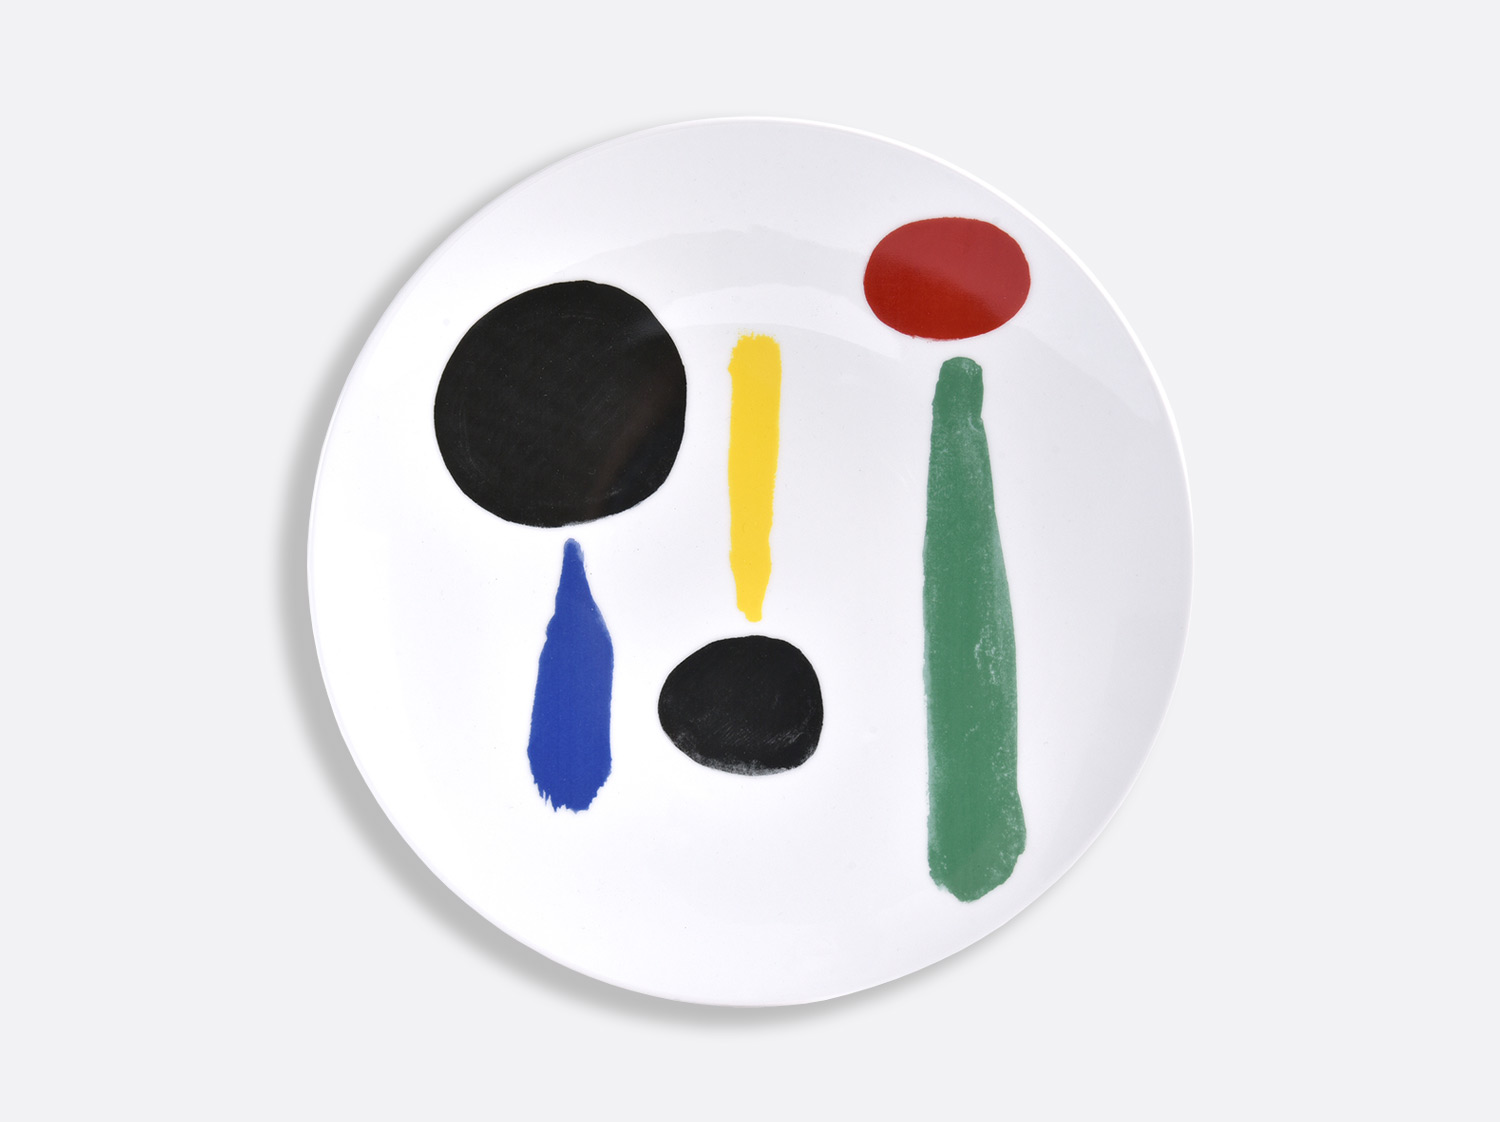 China 2 Dinner plates 10.6" - Page 15 of the collection PARLER SEUL - Joan Miro | Bernardaud